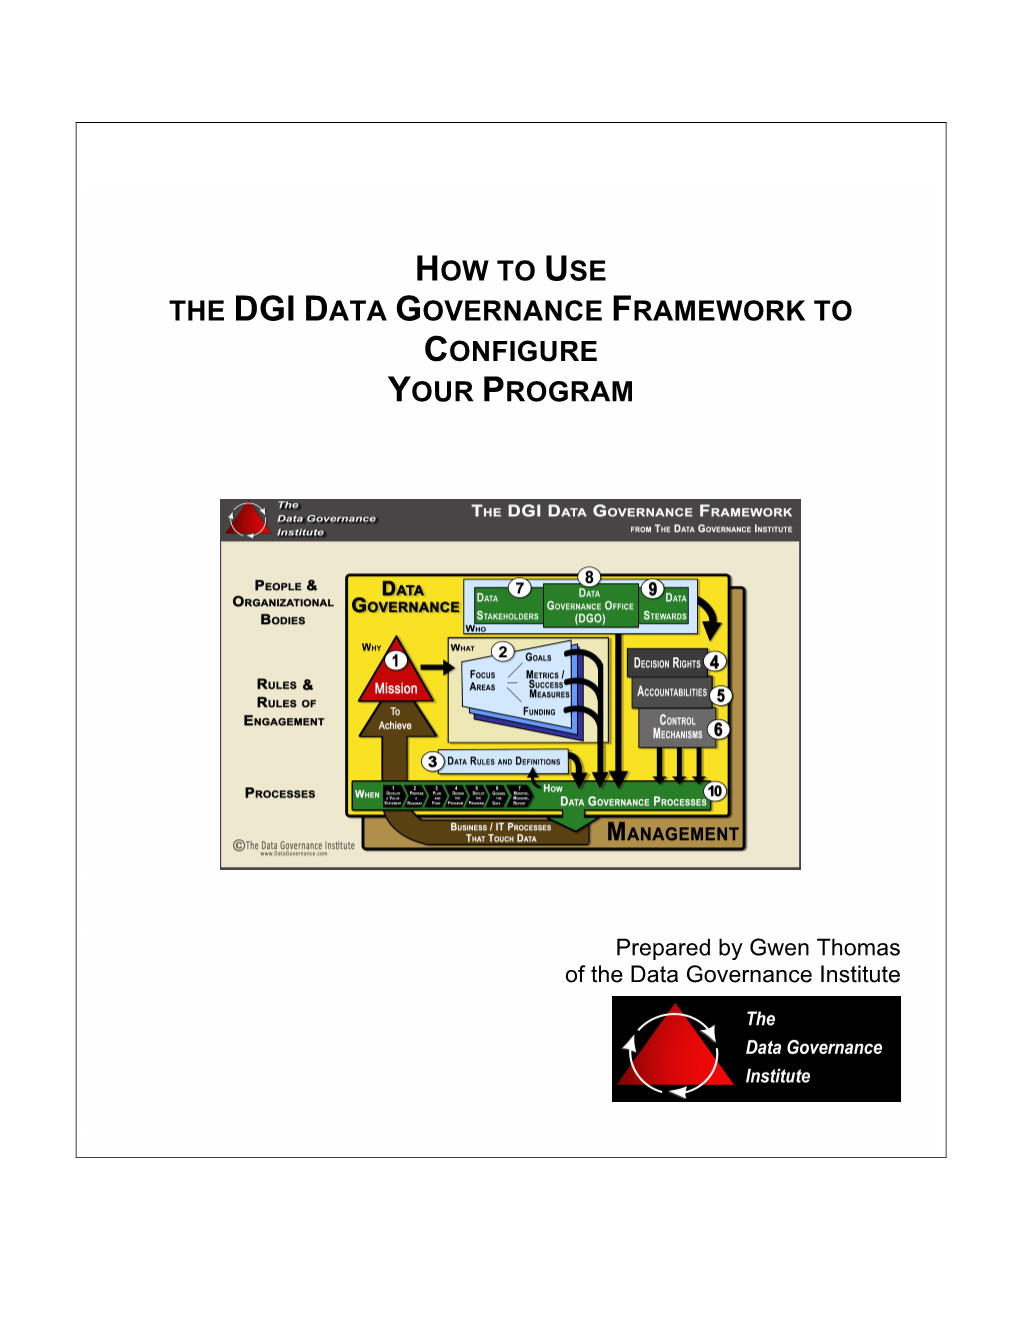 The Dgi Data Governance Framework to Configure Your Program